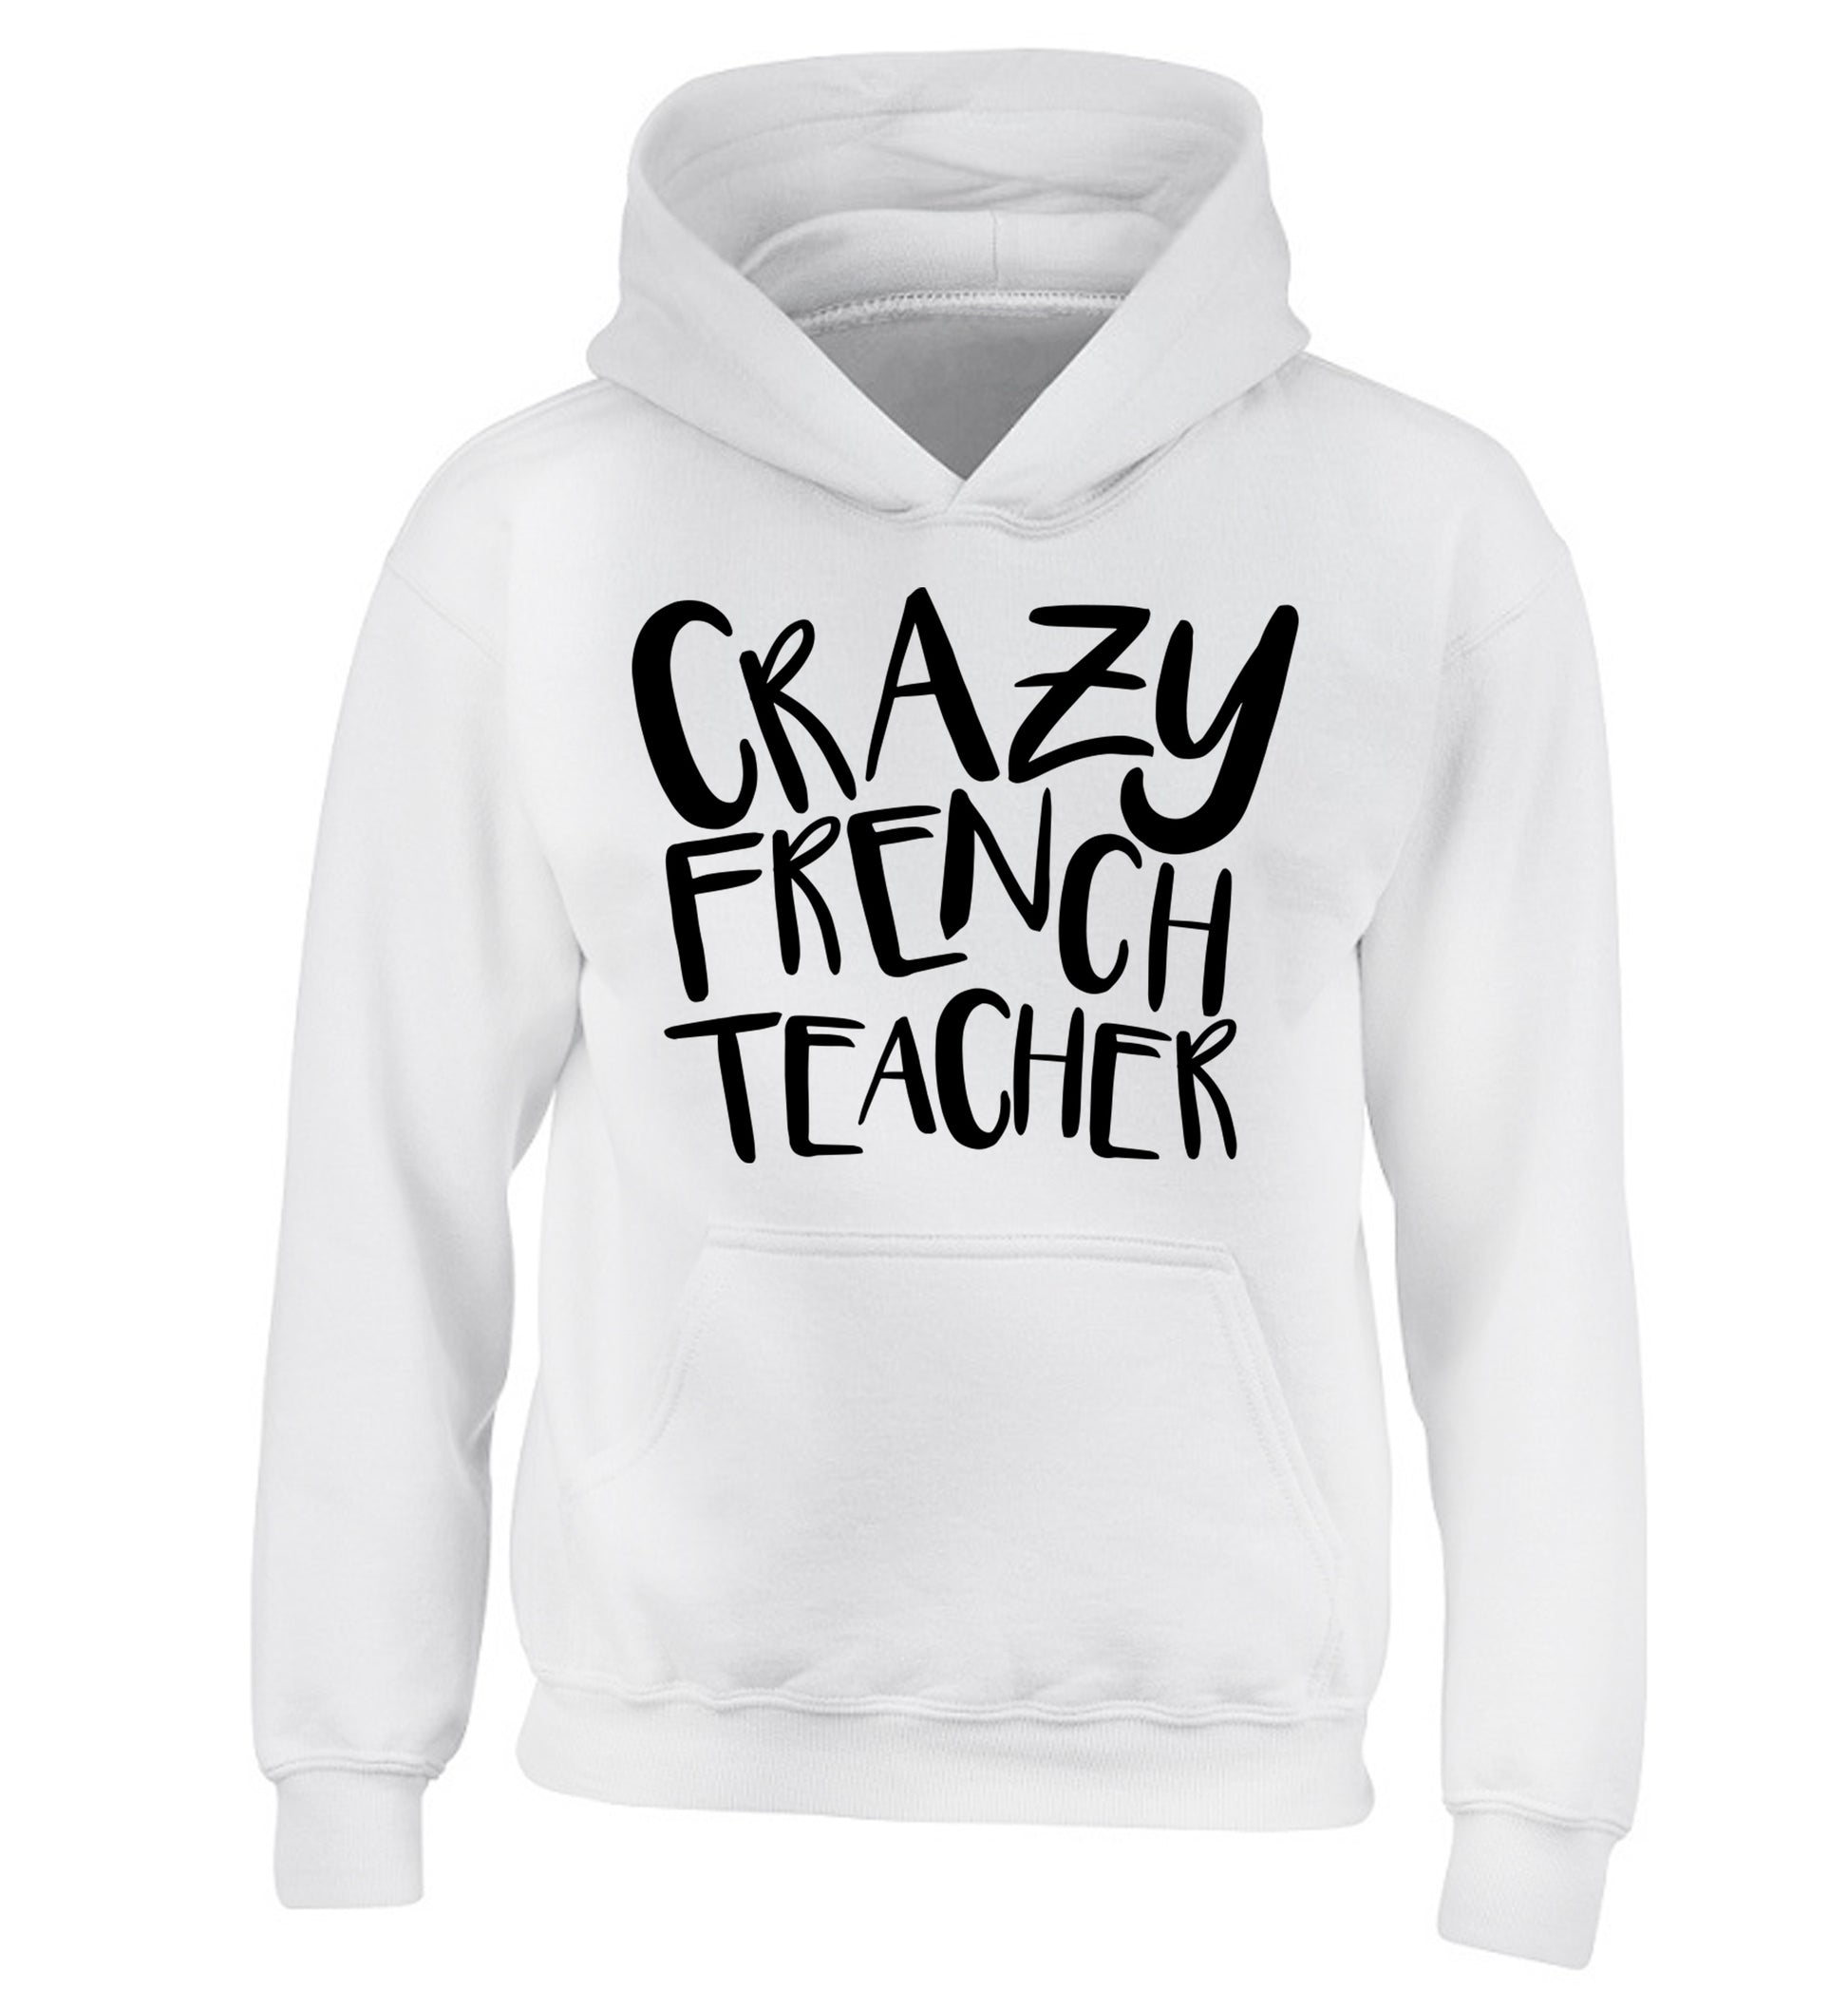 Crazy french teacher children's white hoodie 12-13 Years